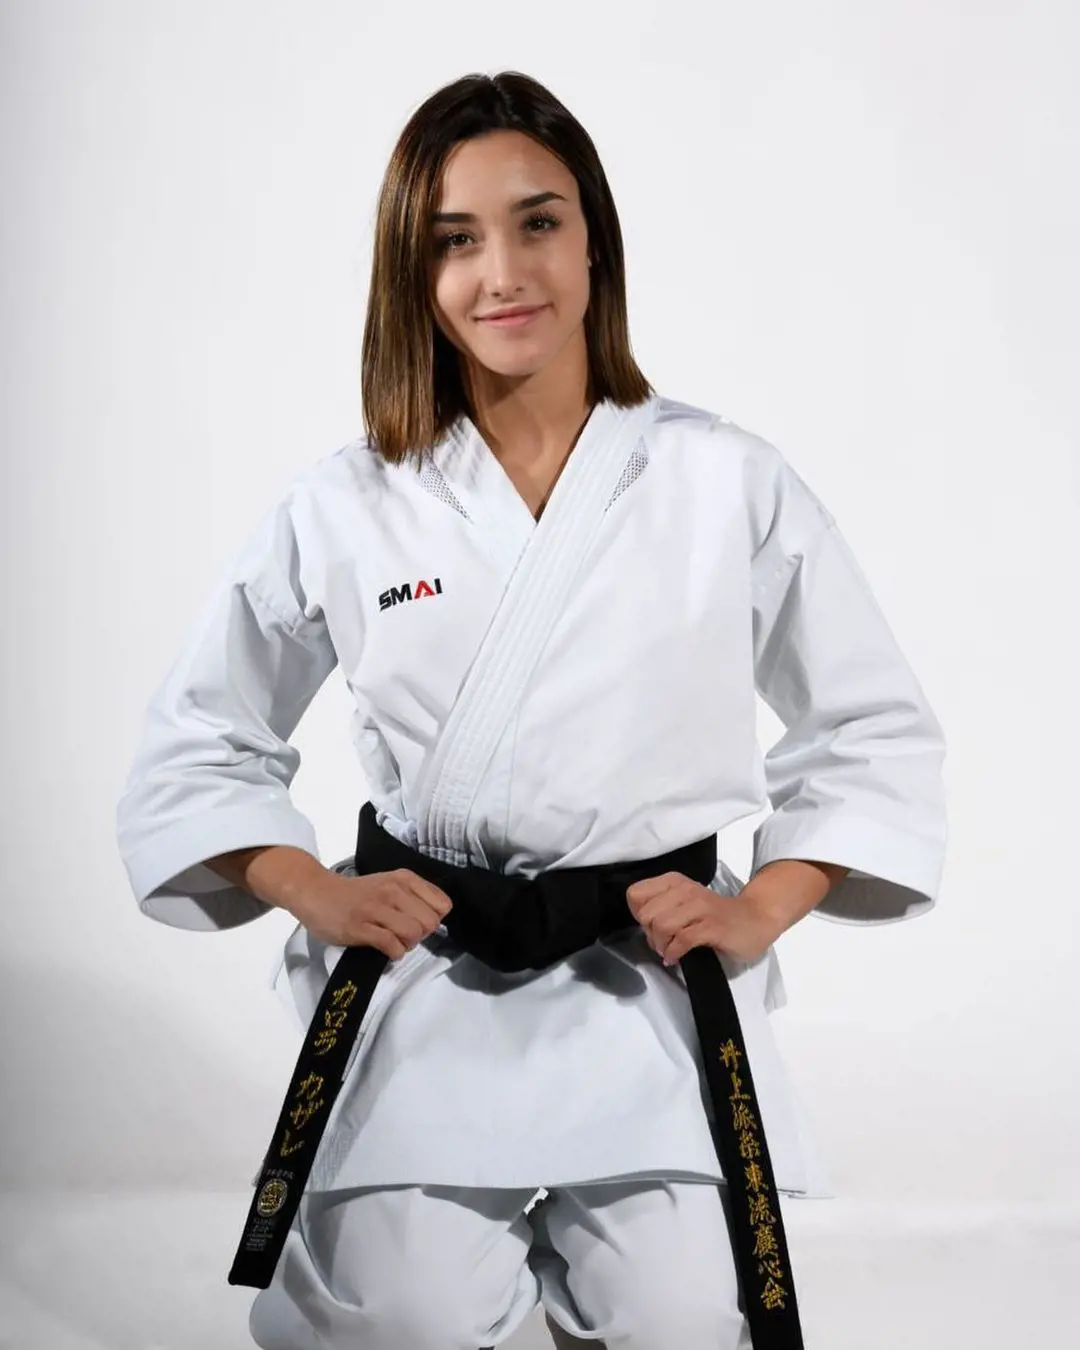 Karate helps women to learn self-defense skills. 